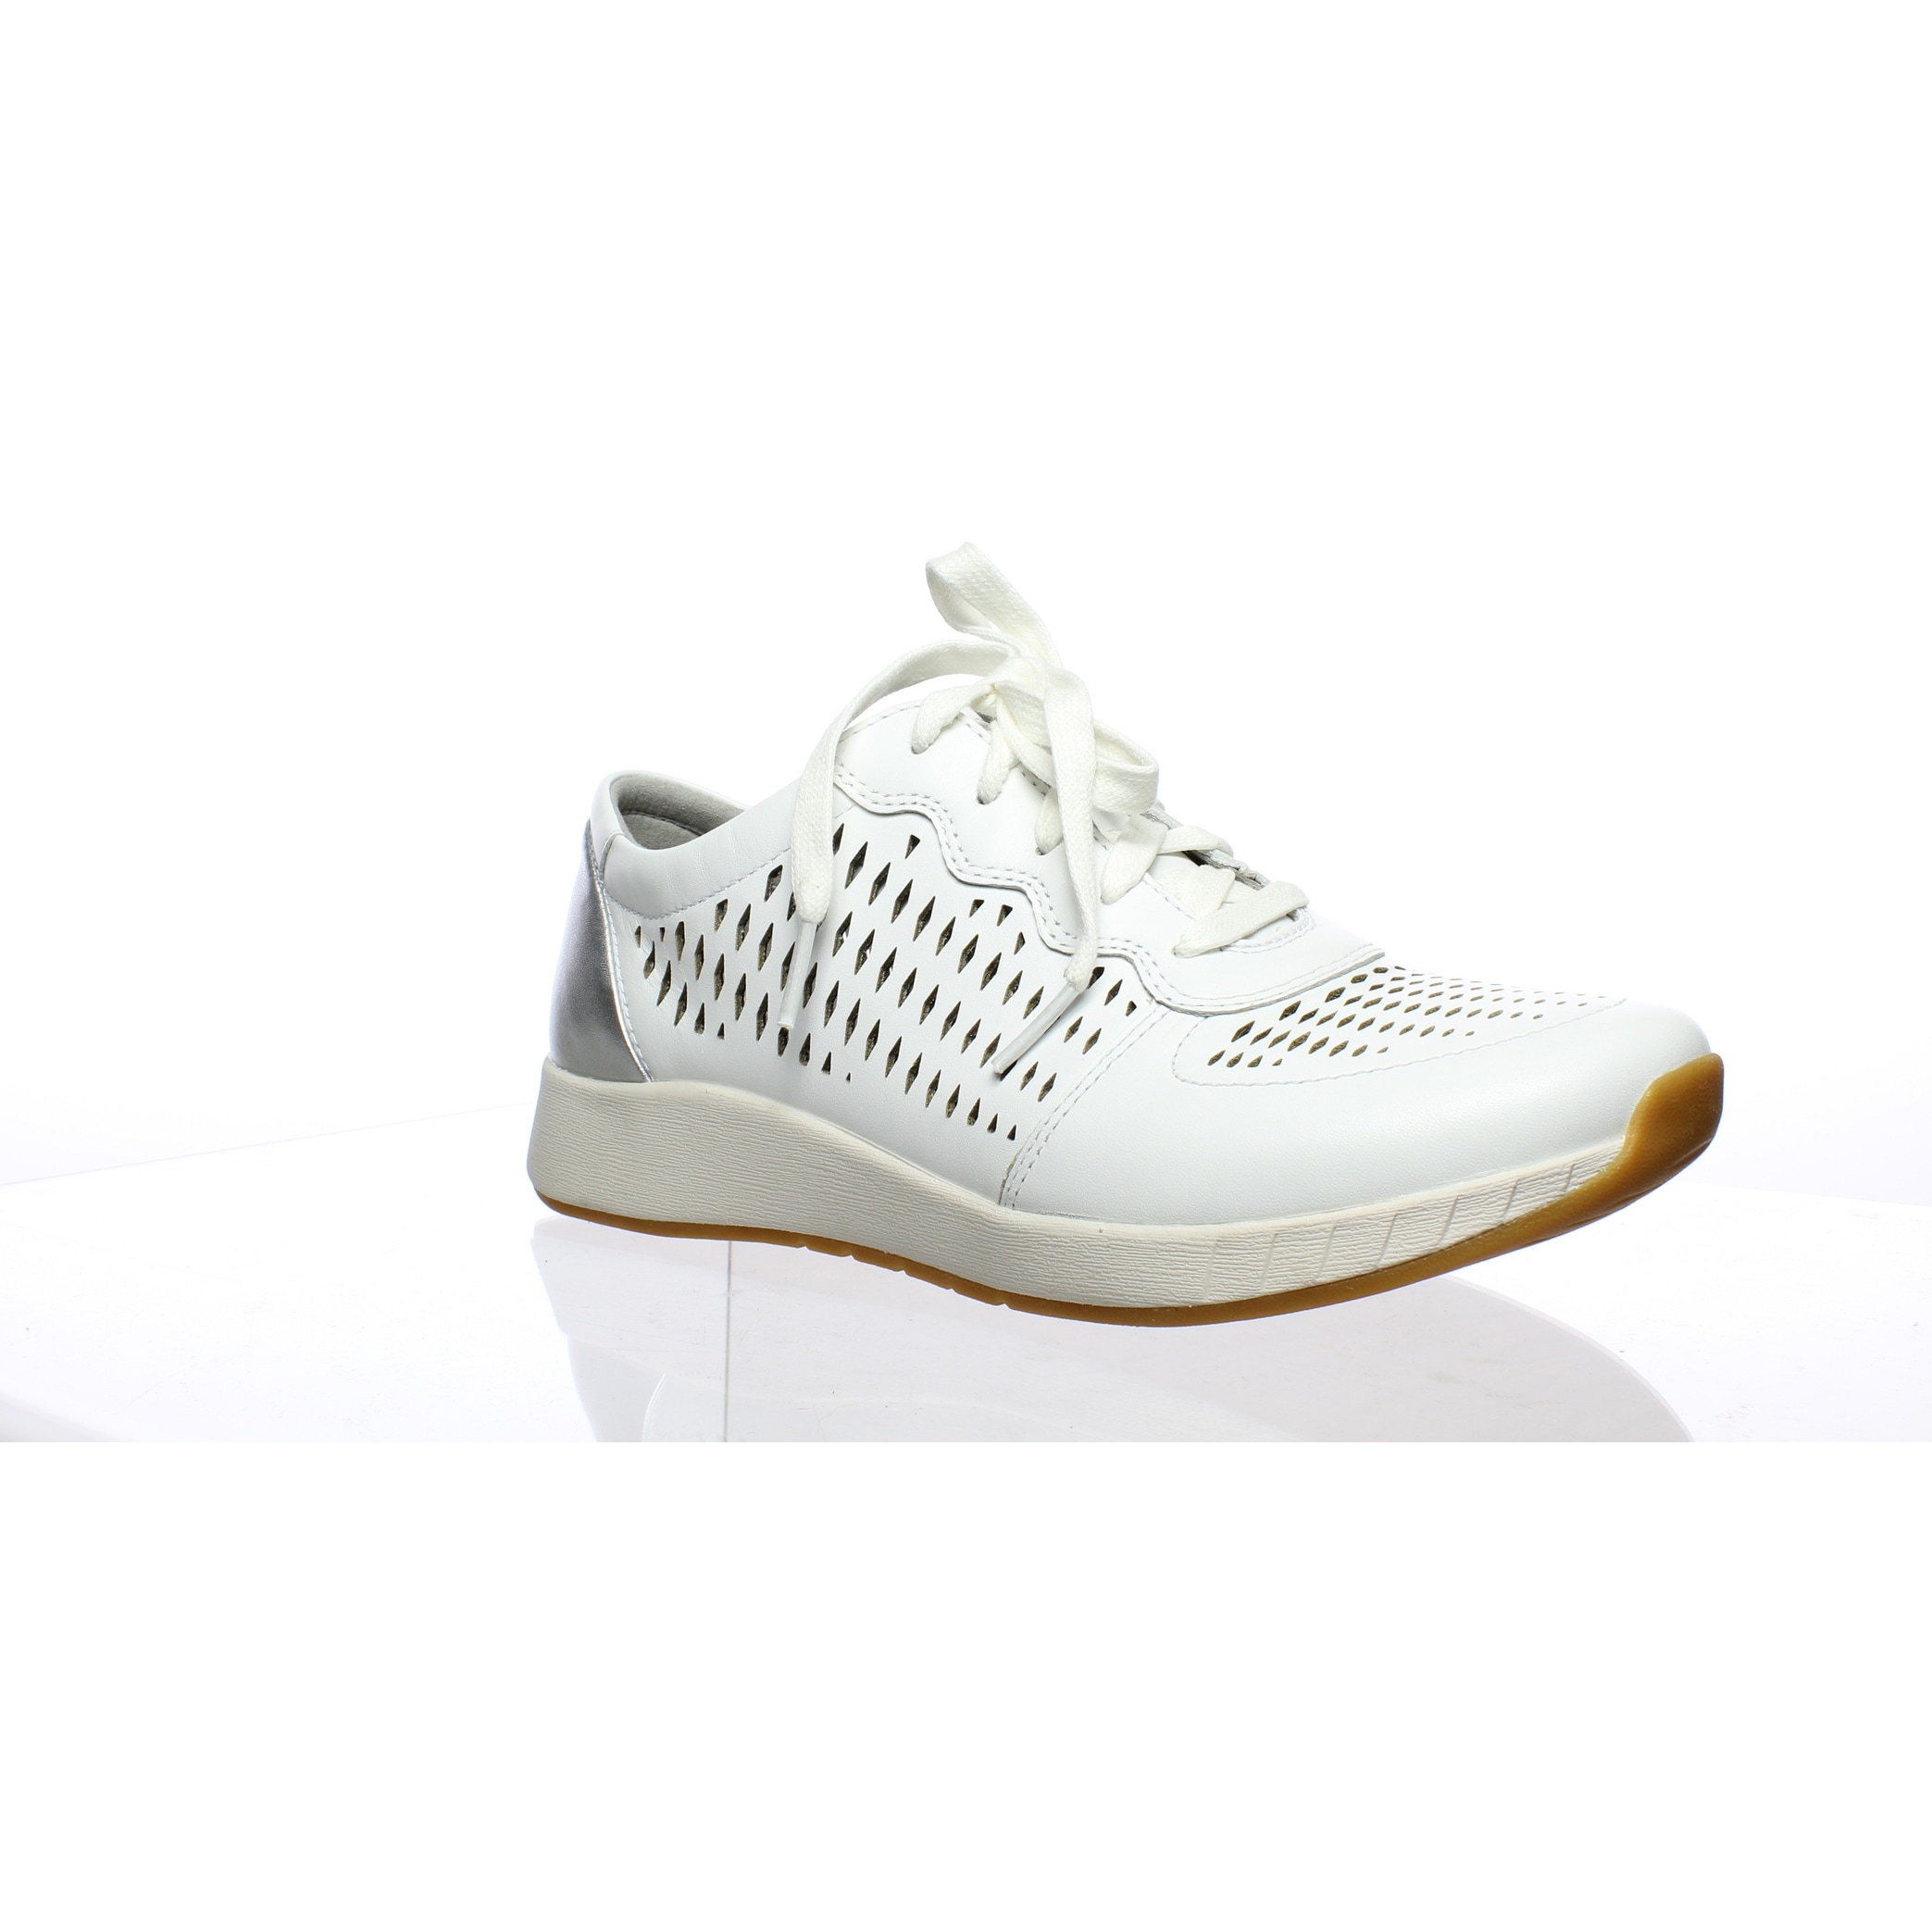 white dansko shoes